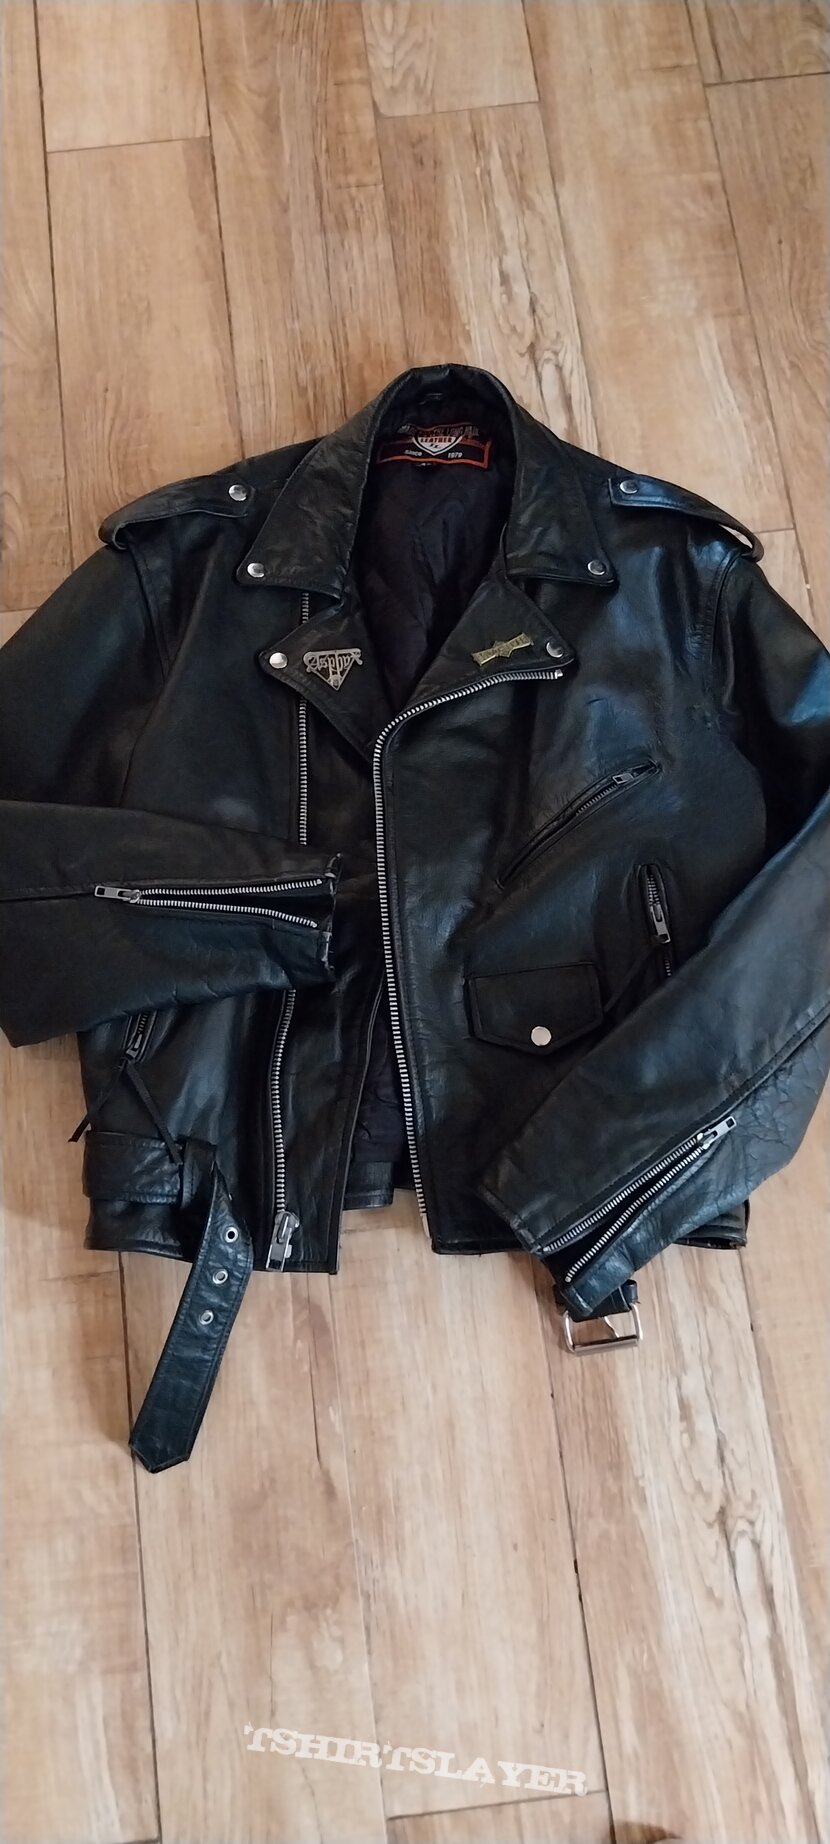 Leather Jacket Old learher jacket.